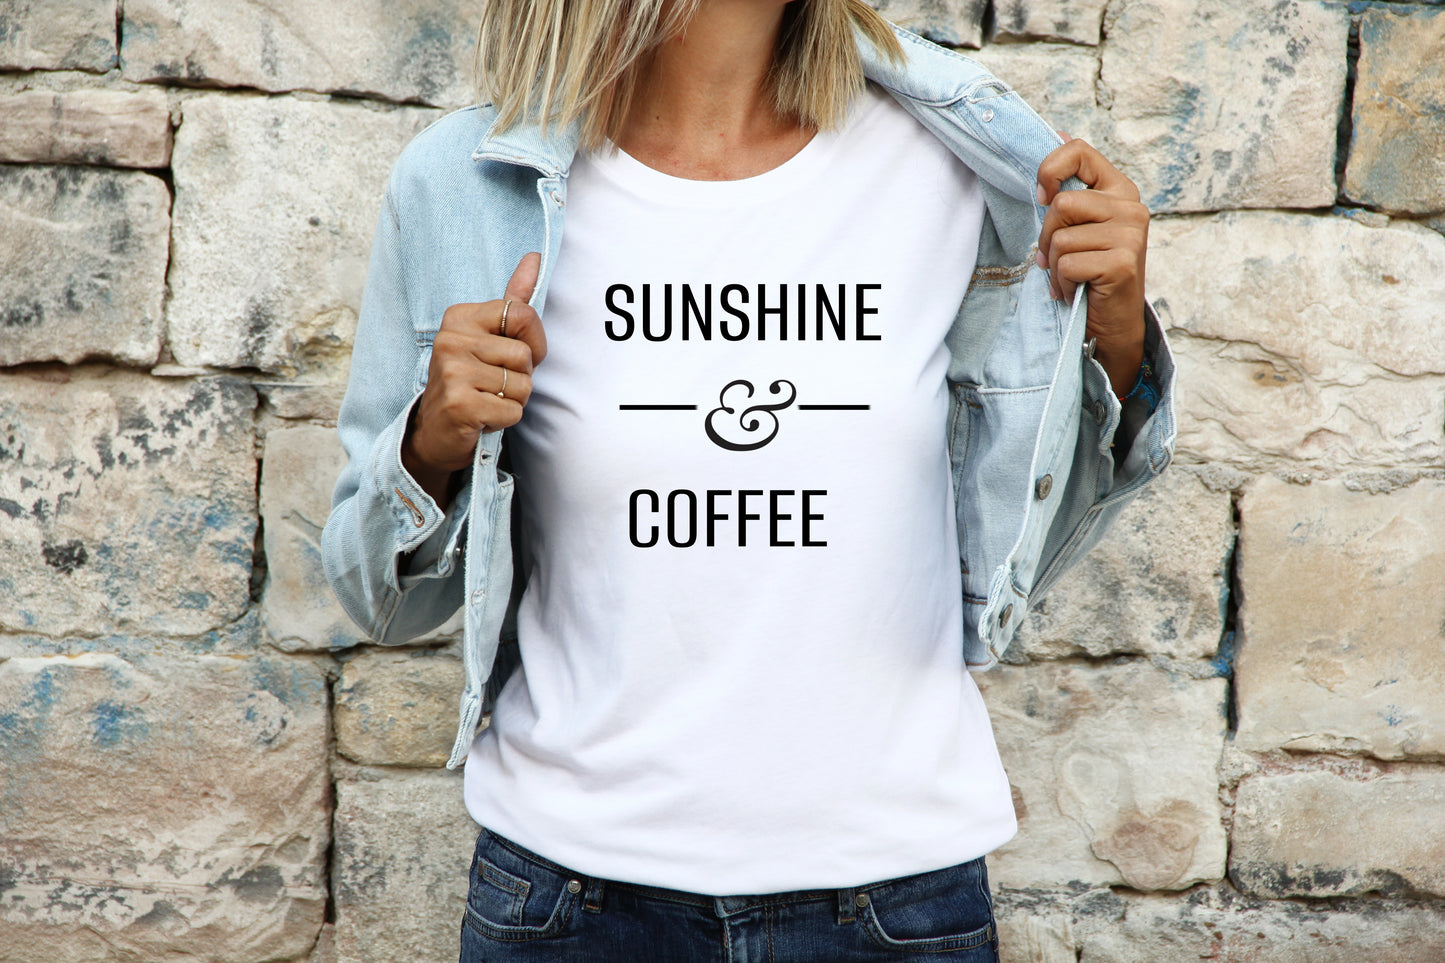 Sunshine and Coffee T-shirt